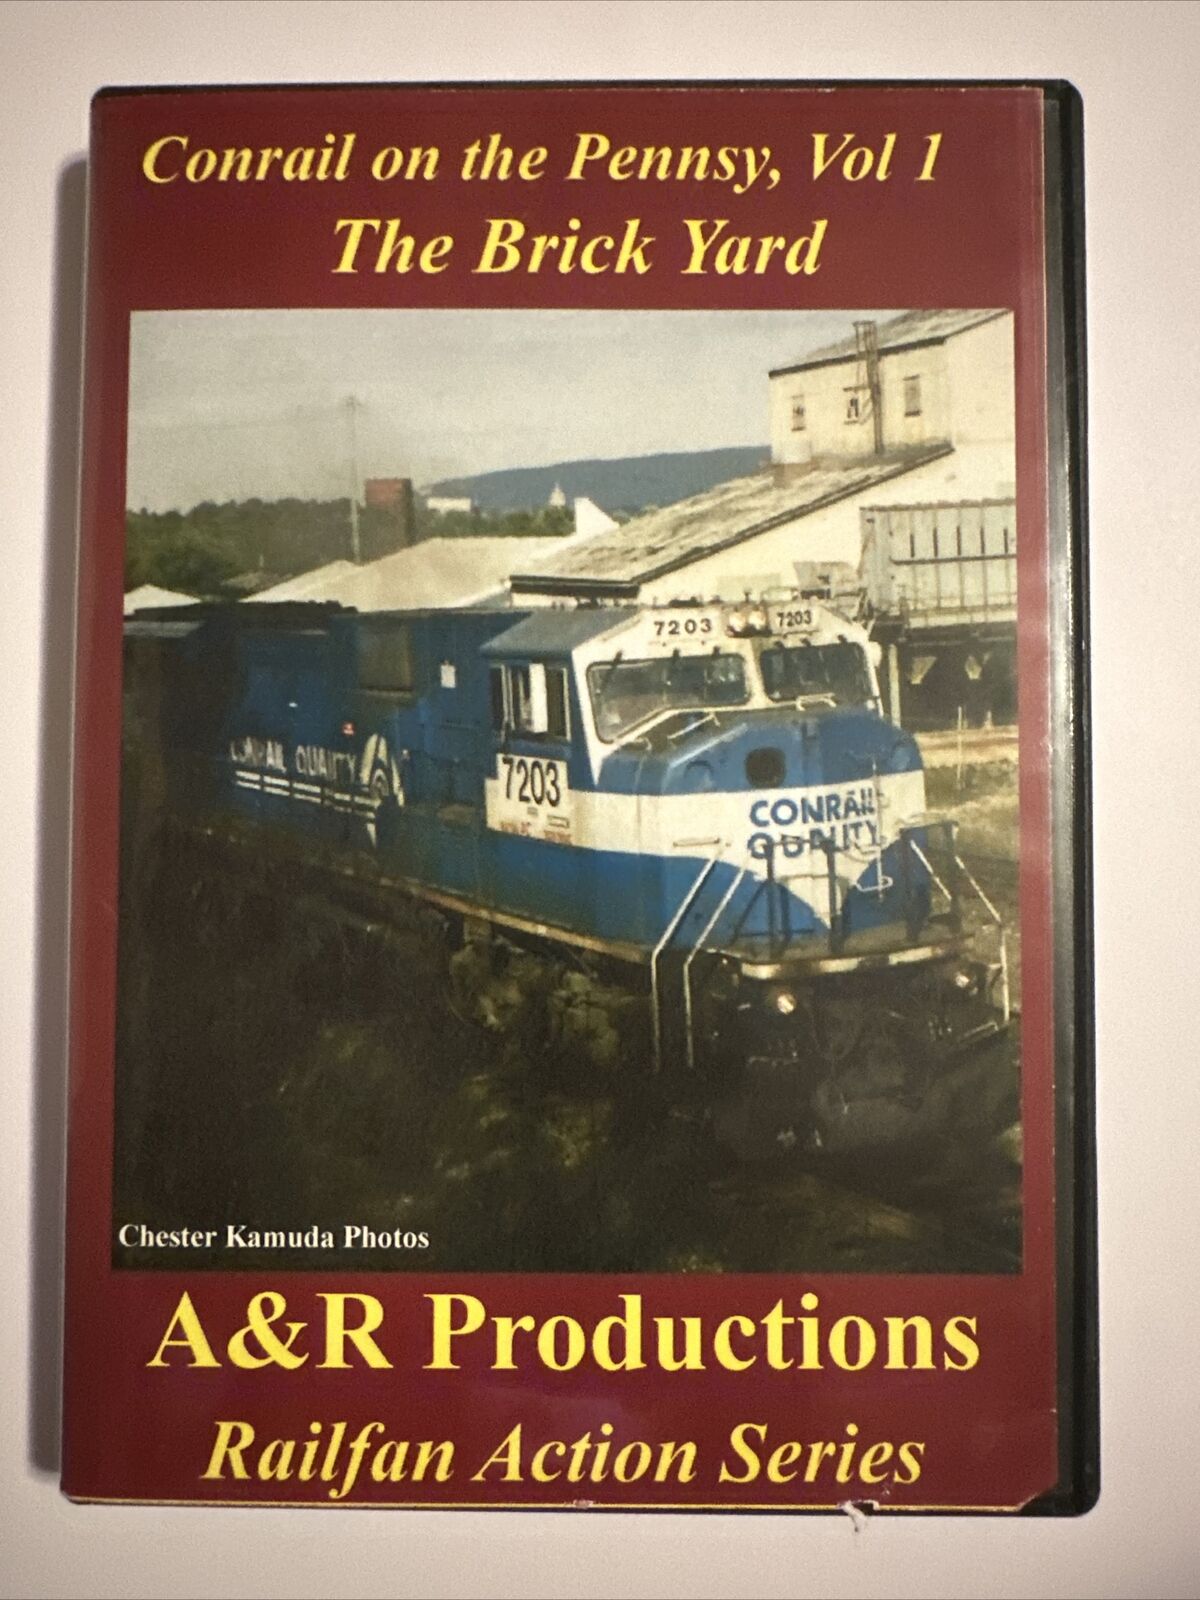 Conrail on the Pennsylvania Vol. 1 The Brick Yard DVD INDUSTRIAL RAILROAD DVD+R